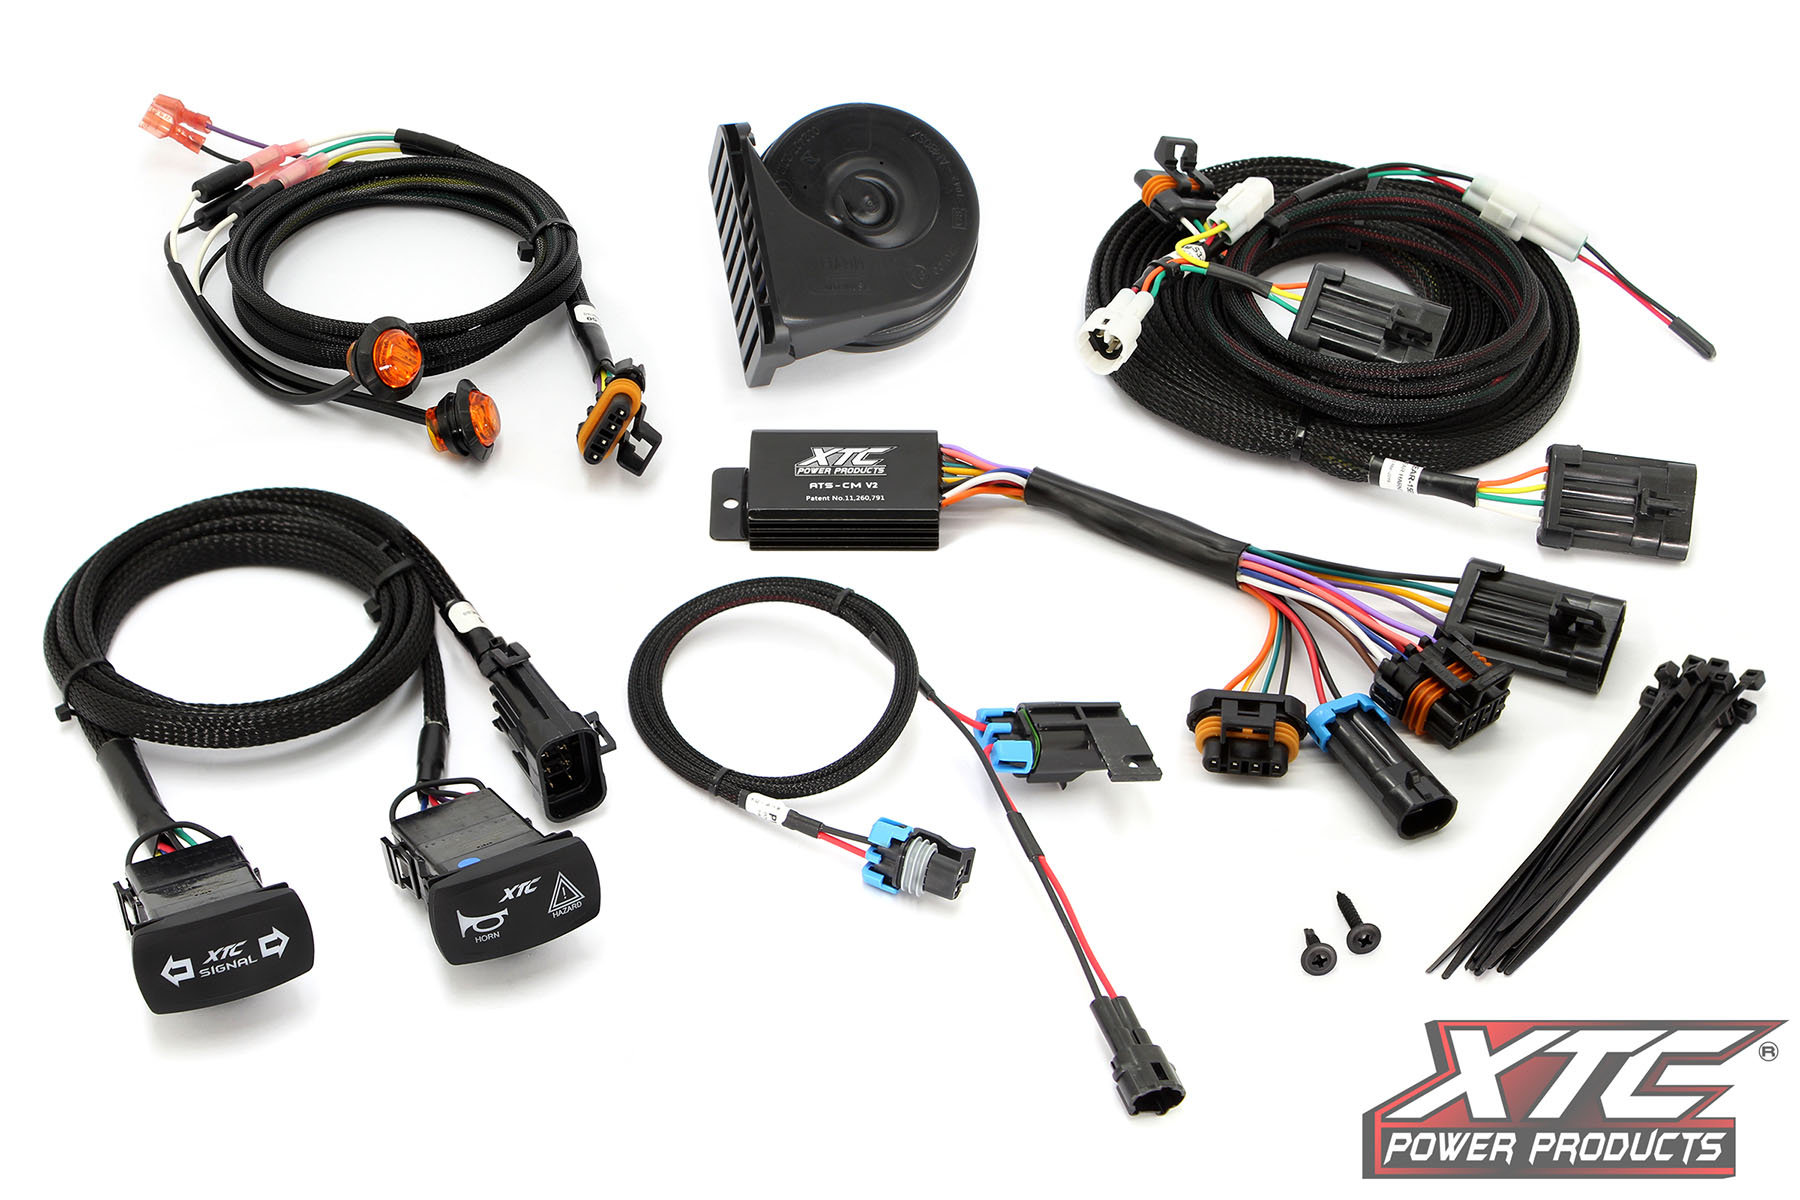 Details about   Rocker Switch Turn Signal Kit Blinker Street Legal System For Yamaha Wolverine 